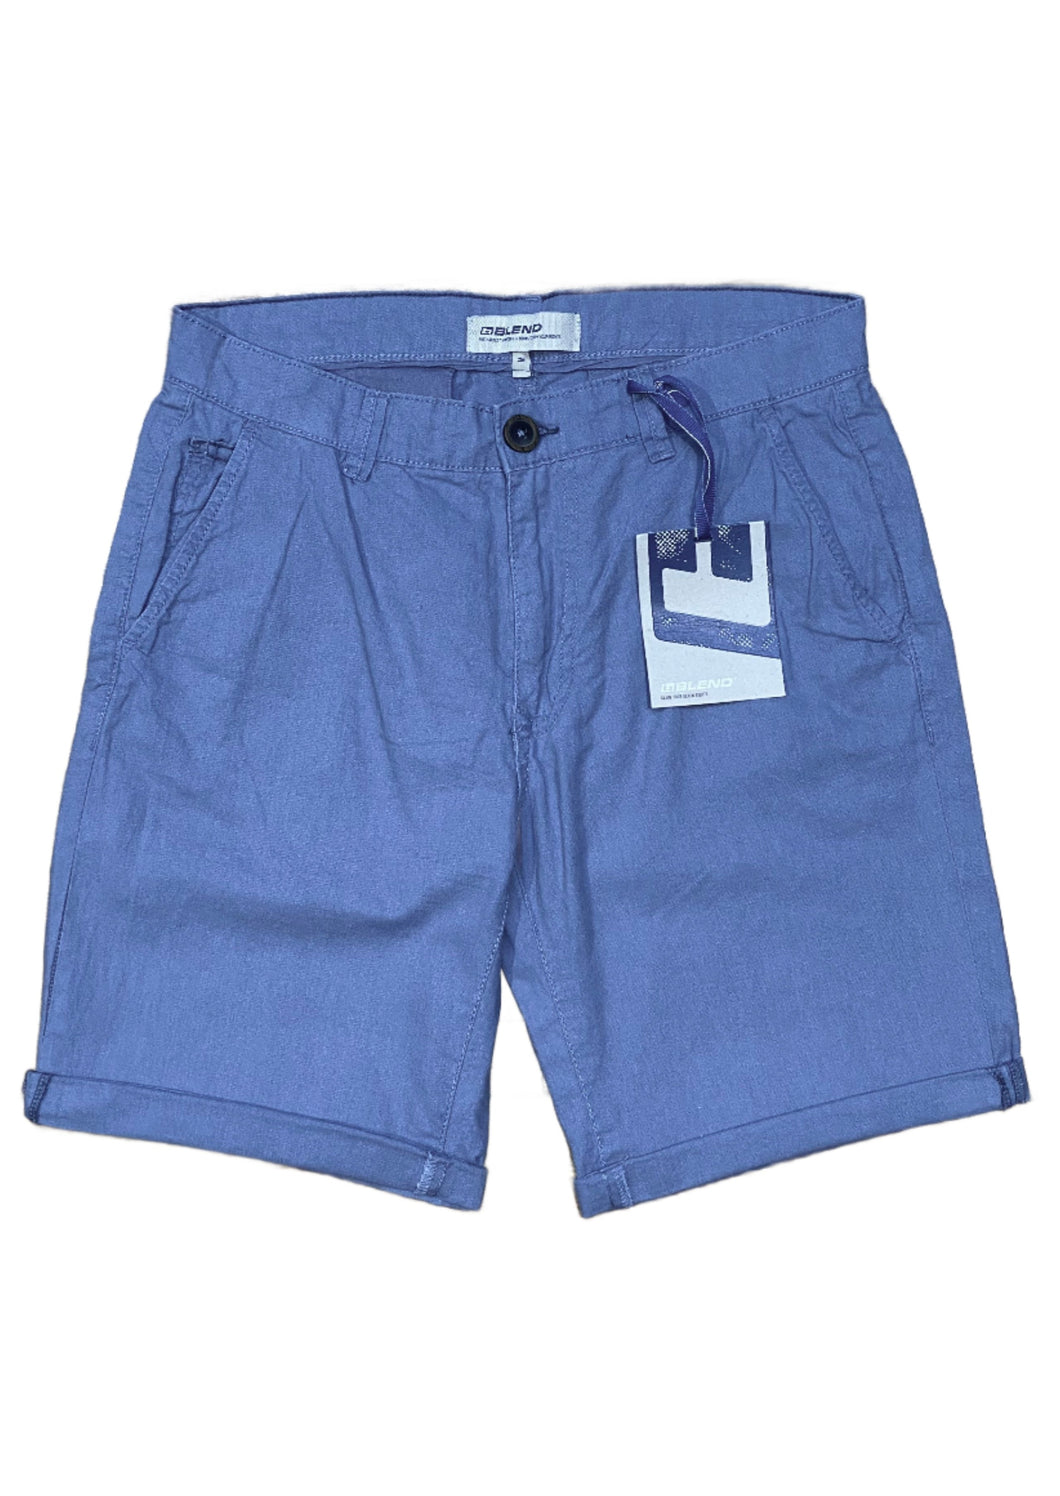 Woven Linen Blend Shorts Coral Blue